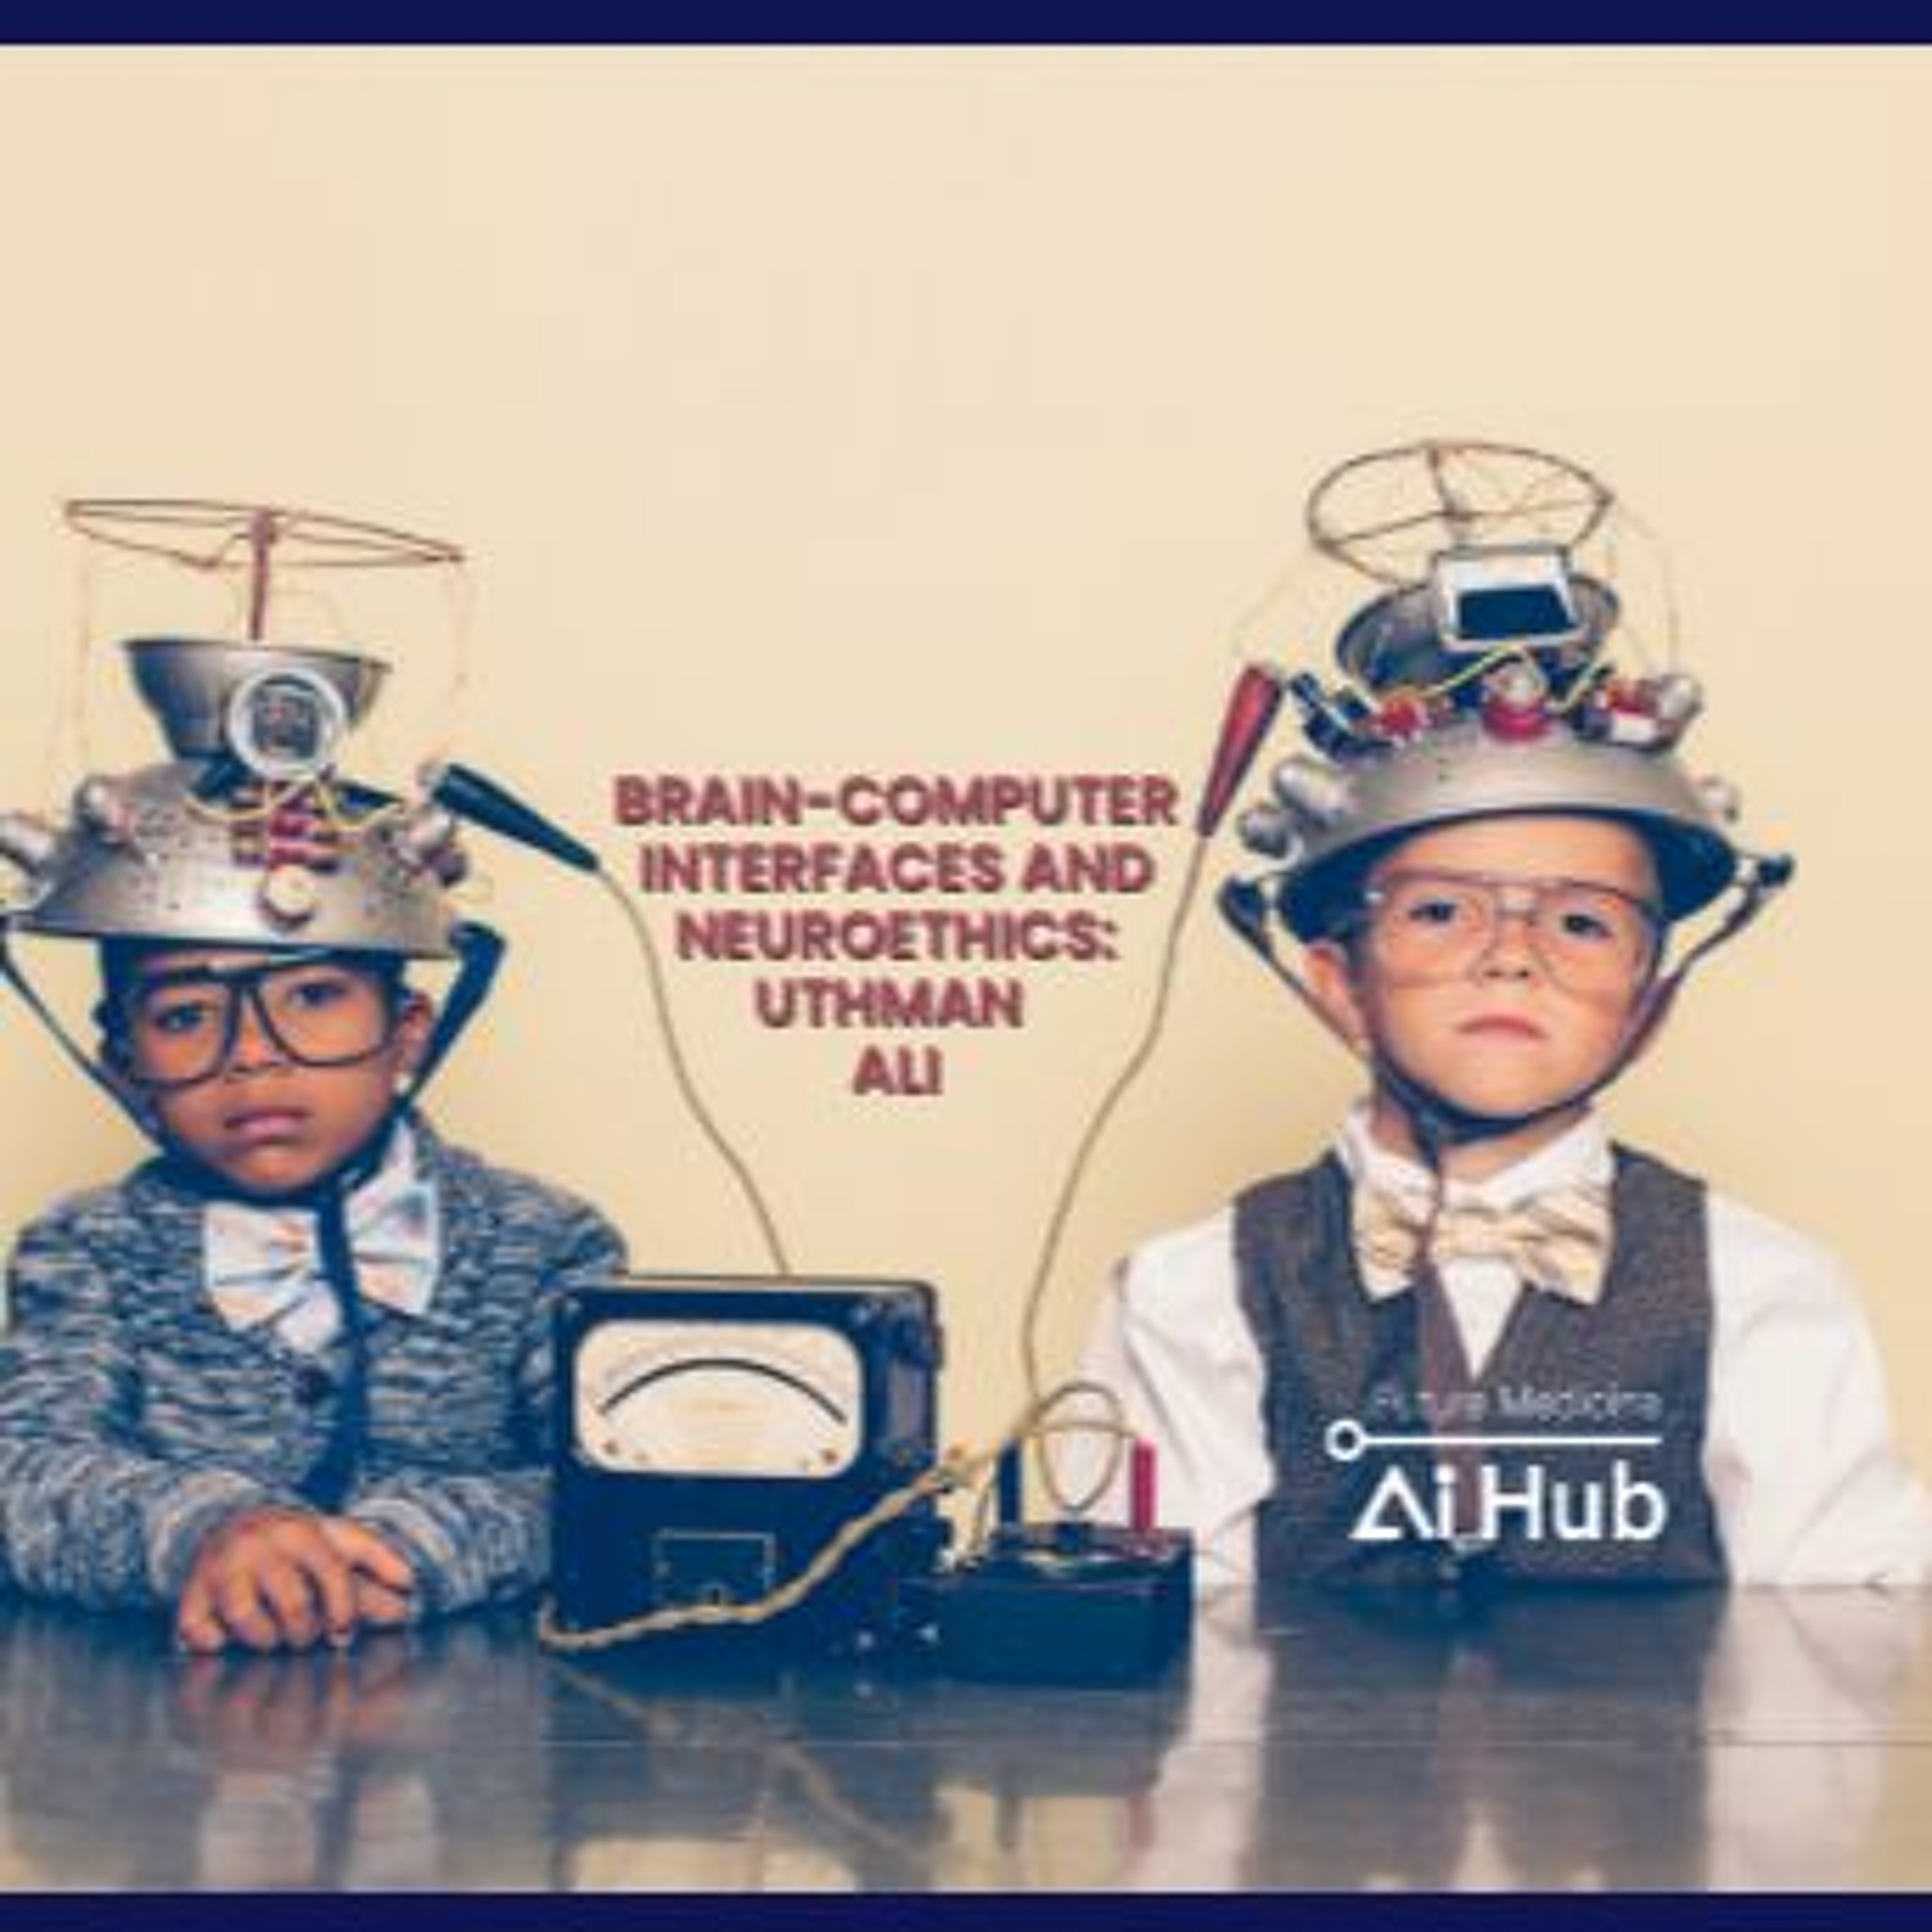 Brain-computer interfaces and neuroethics with Uthman Ali